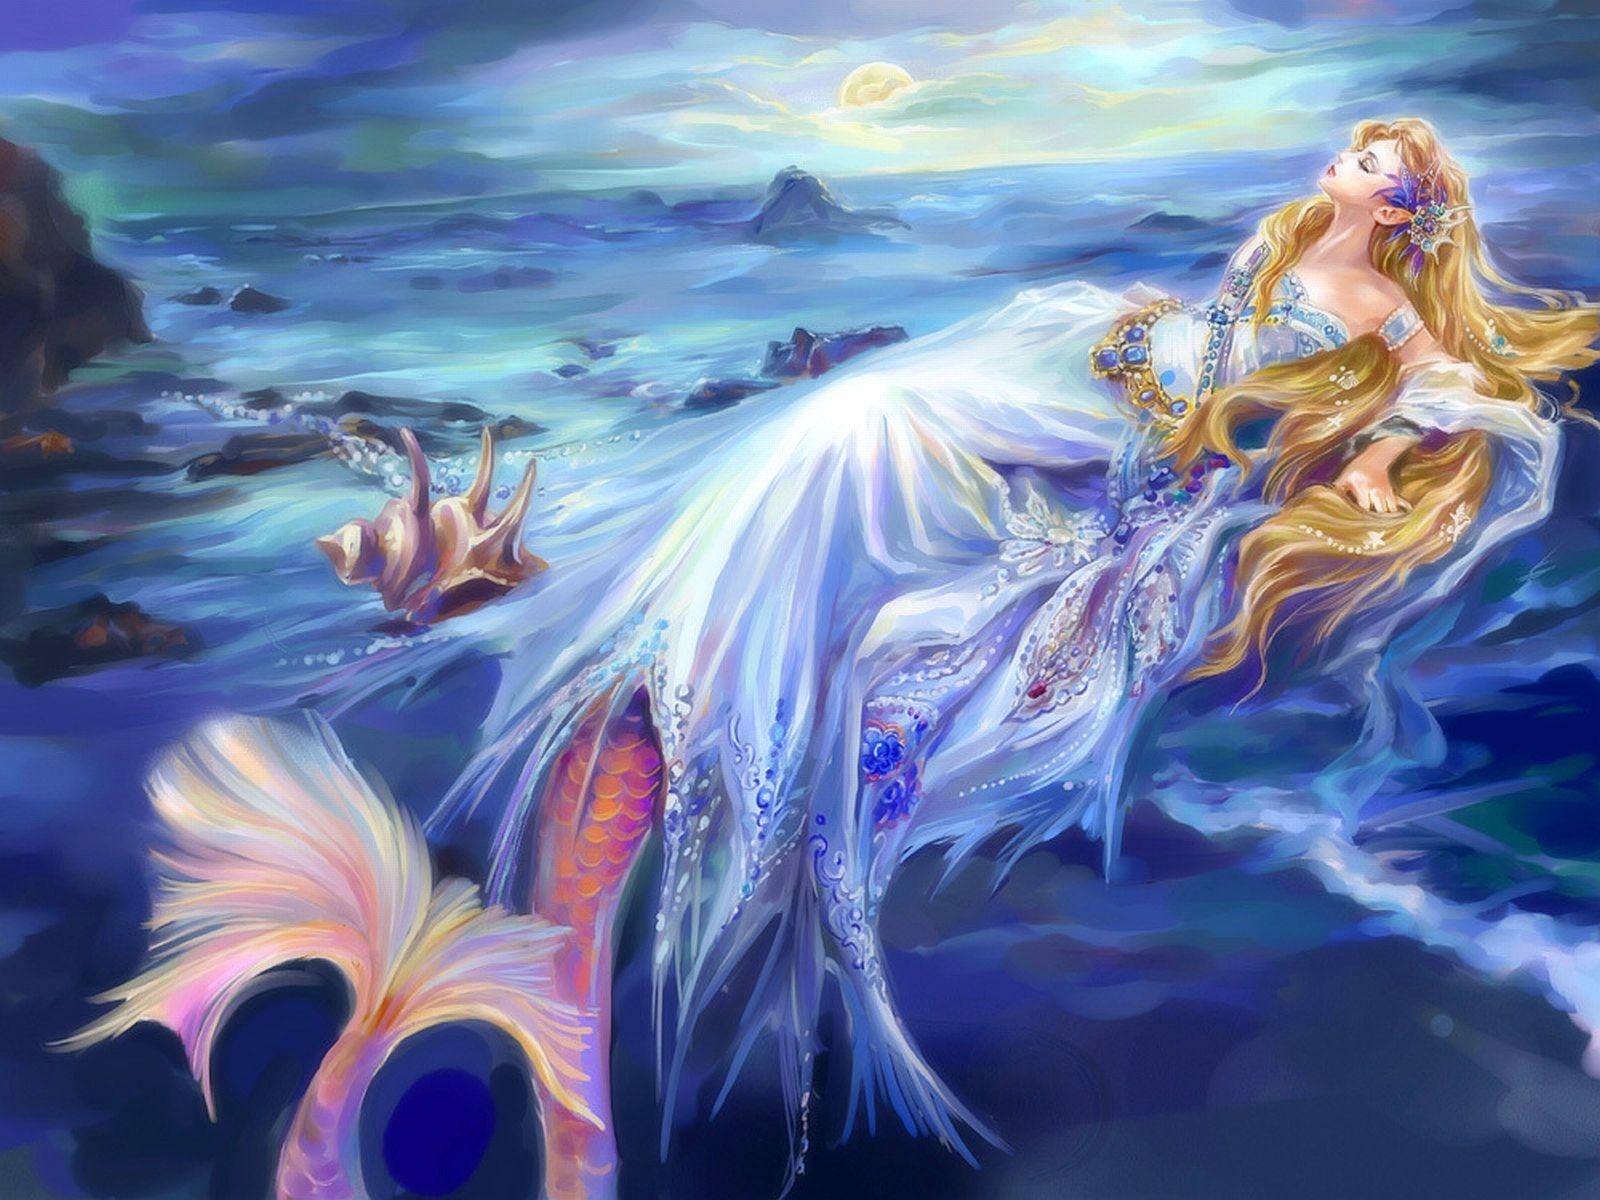 Mermaid Computer Wallpaper, Desktop Backgroundx1200. Anime mermaid, Mermaid wallpaper background, Fantasy mermaid